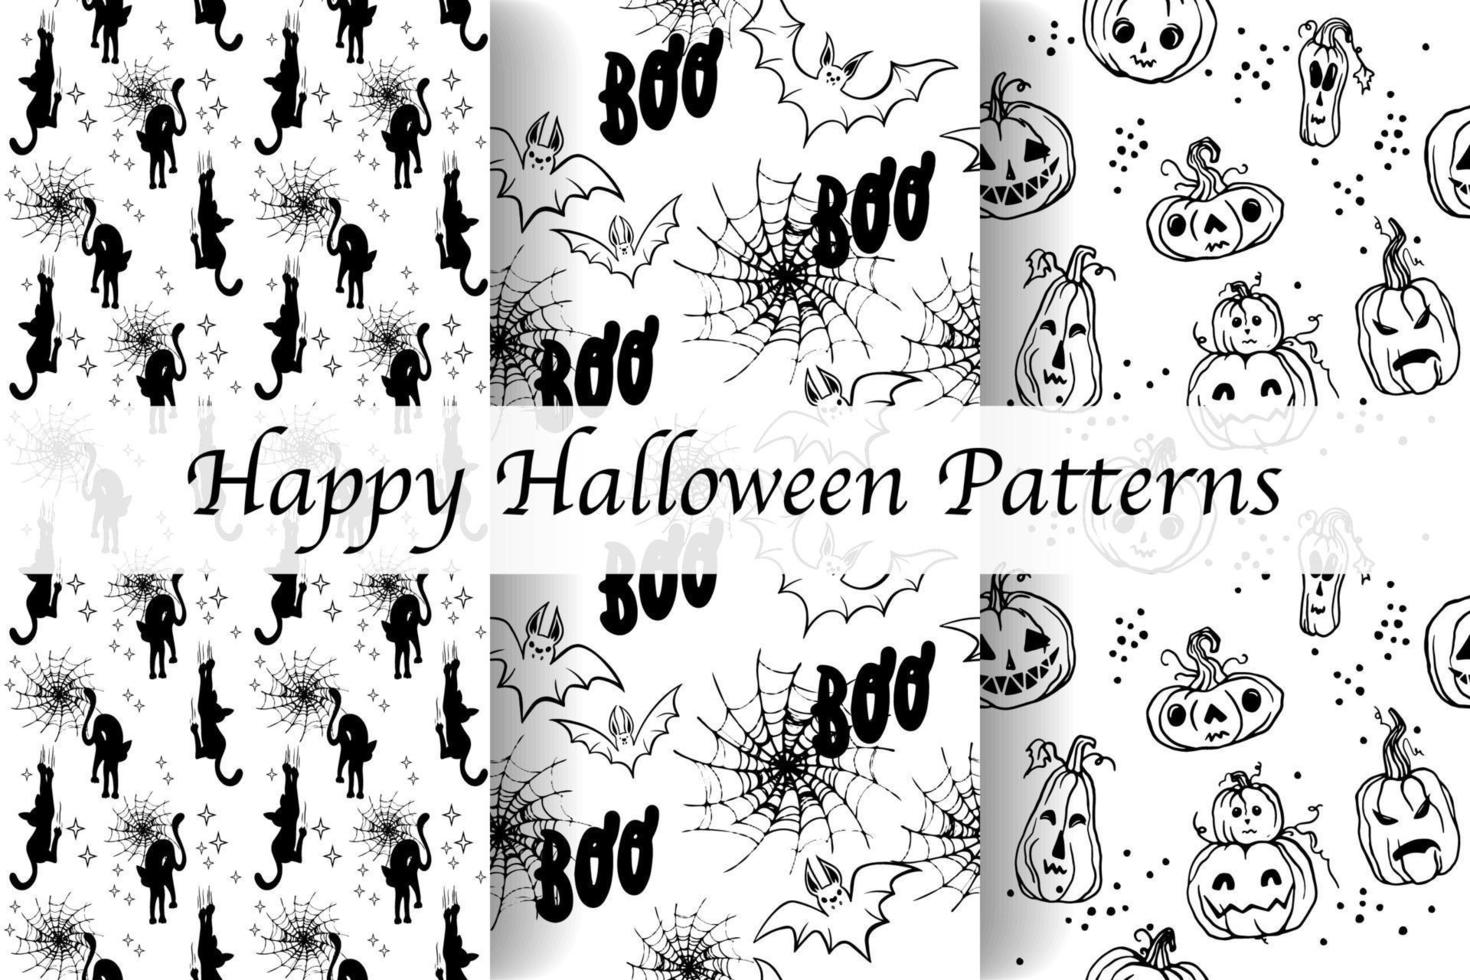 patrón de moda. feliz Halloween. murciélagos, gatos, calabazas con web. boo.. dibujo a mano alzada. ilustraciones modernas de vectores de línea continua. dulces o vida